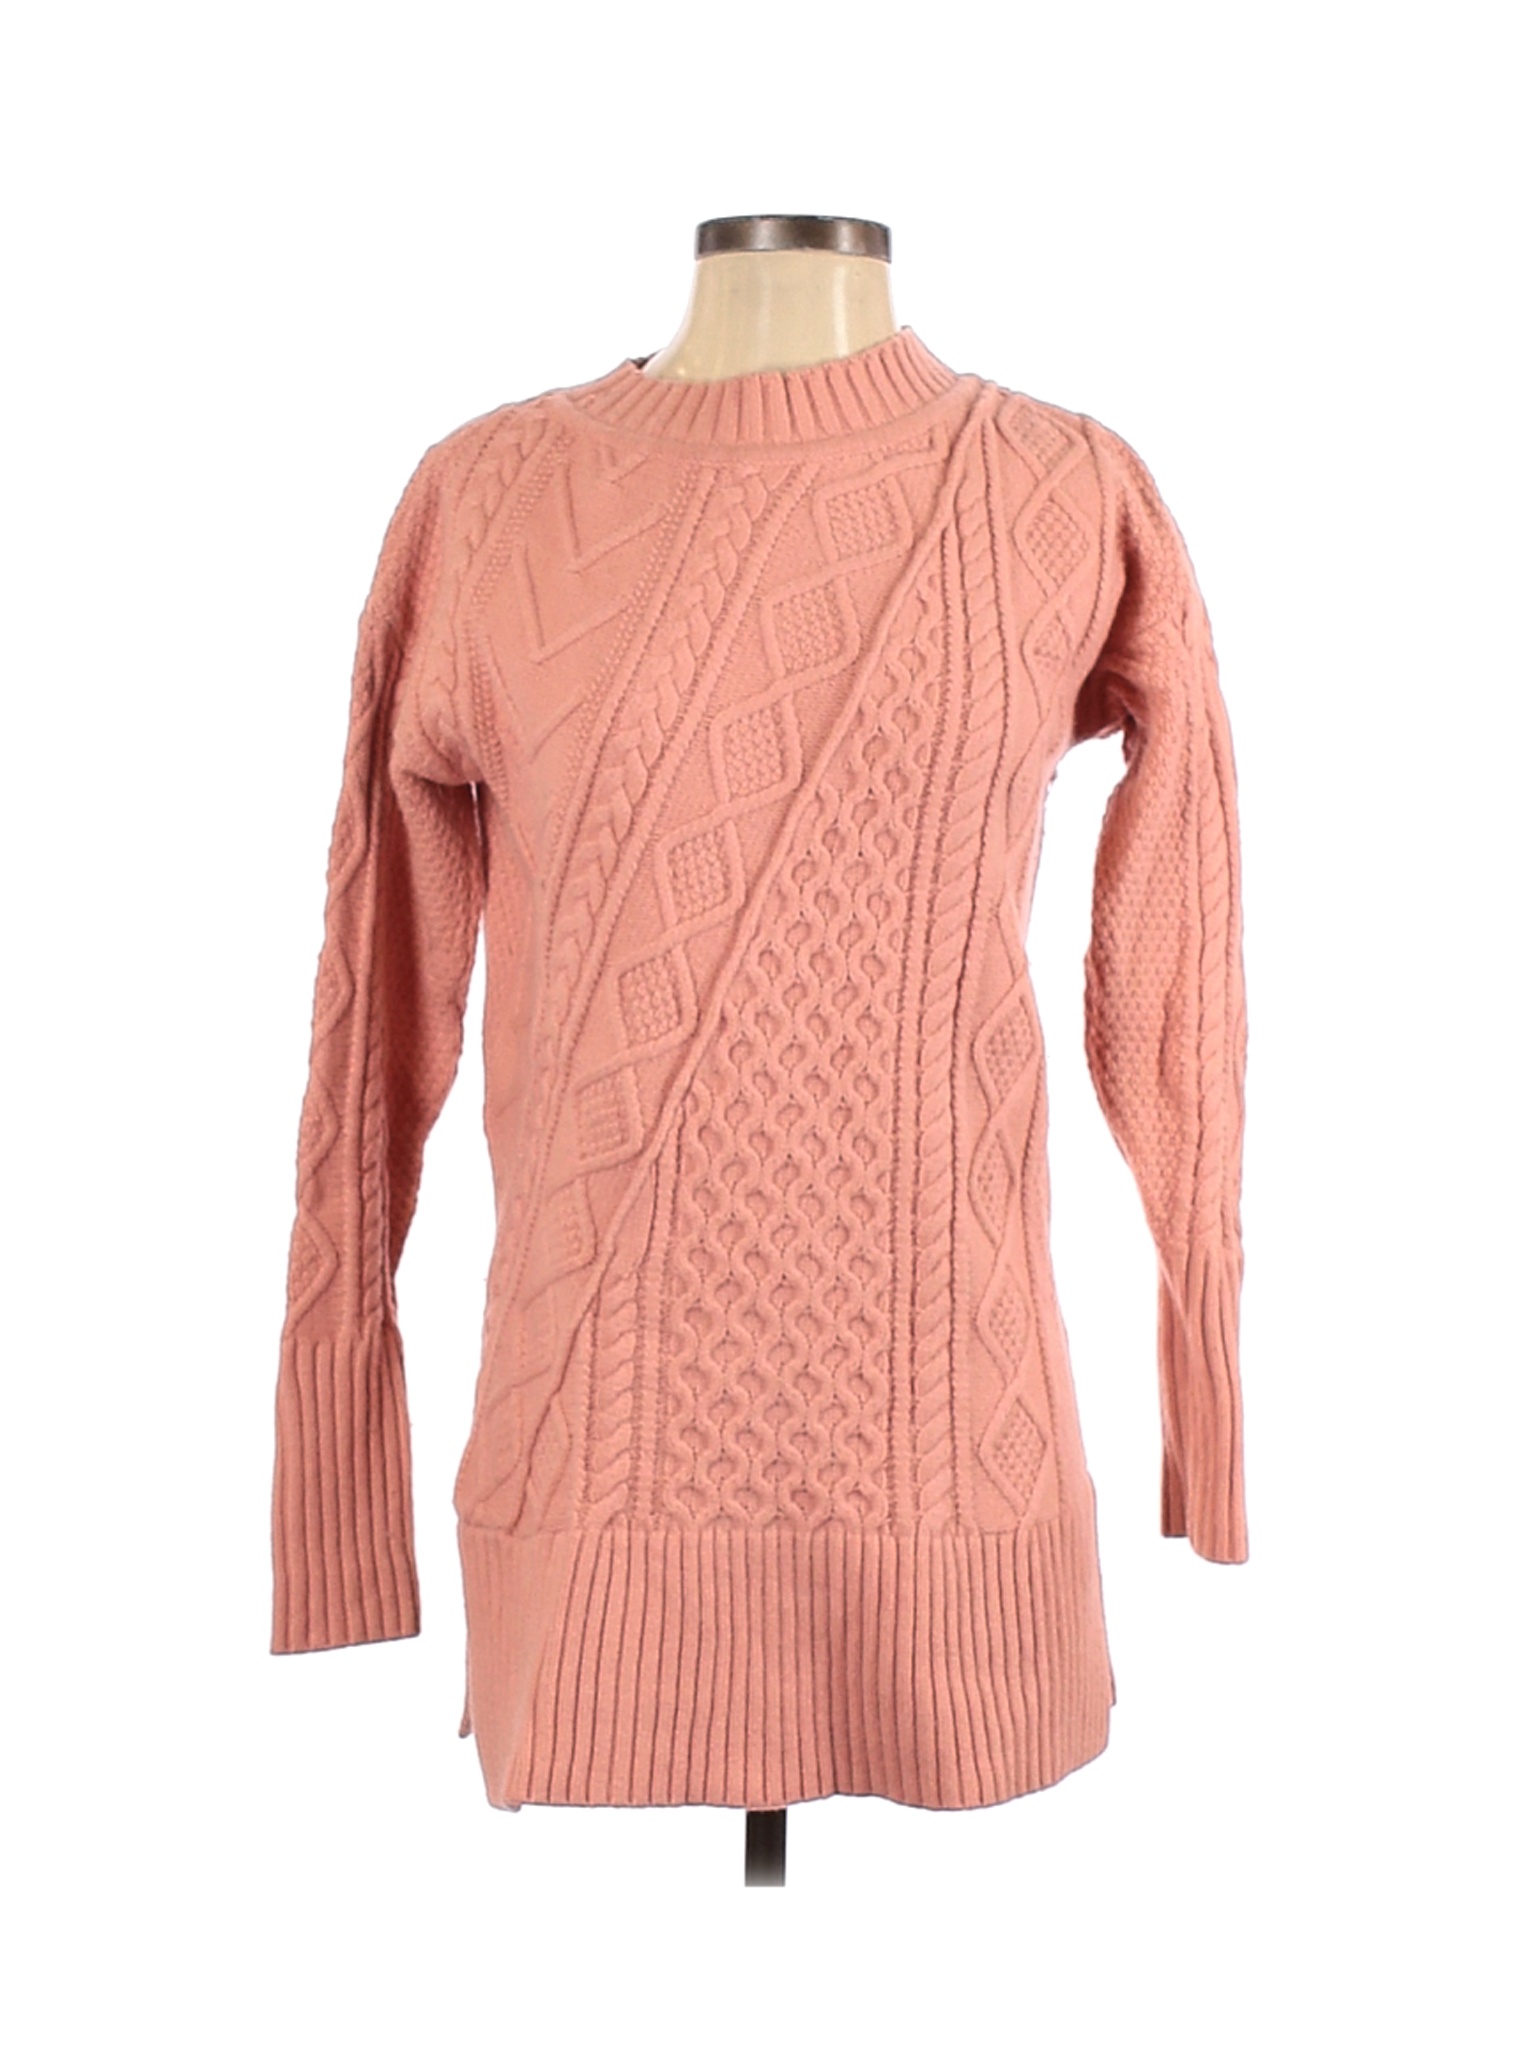 J.Crew Women Pink Wool Pullover Sweater S | eBay